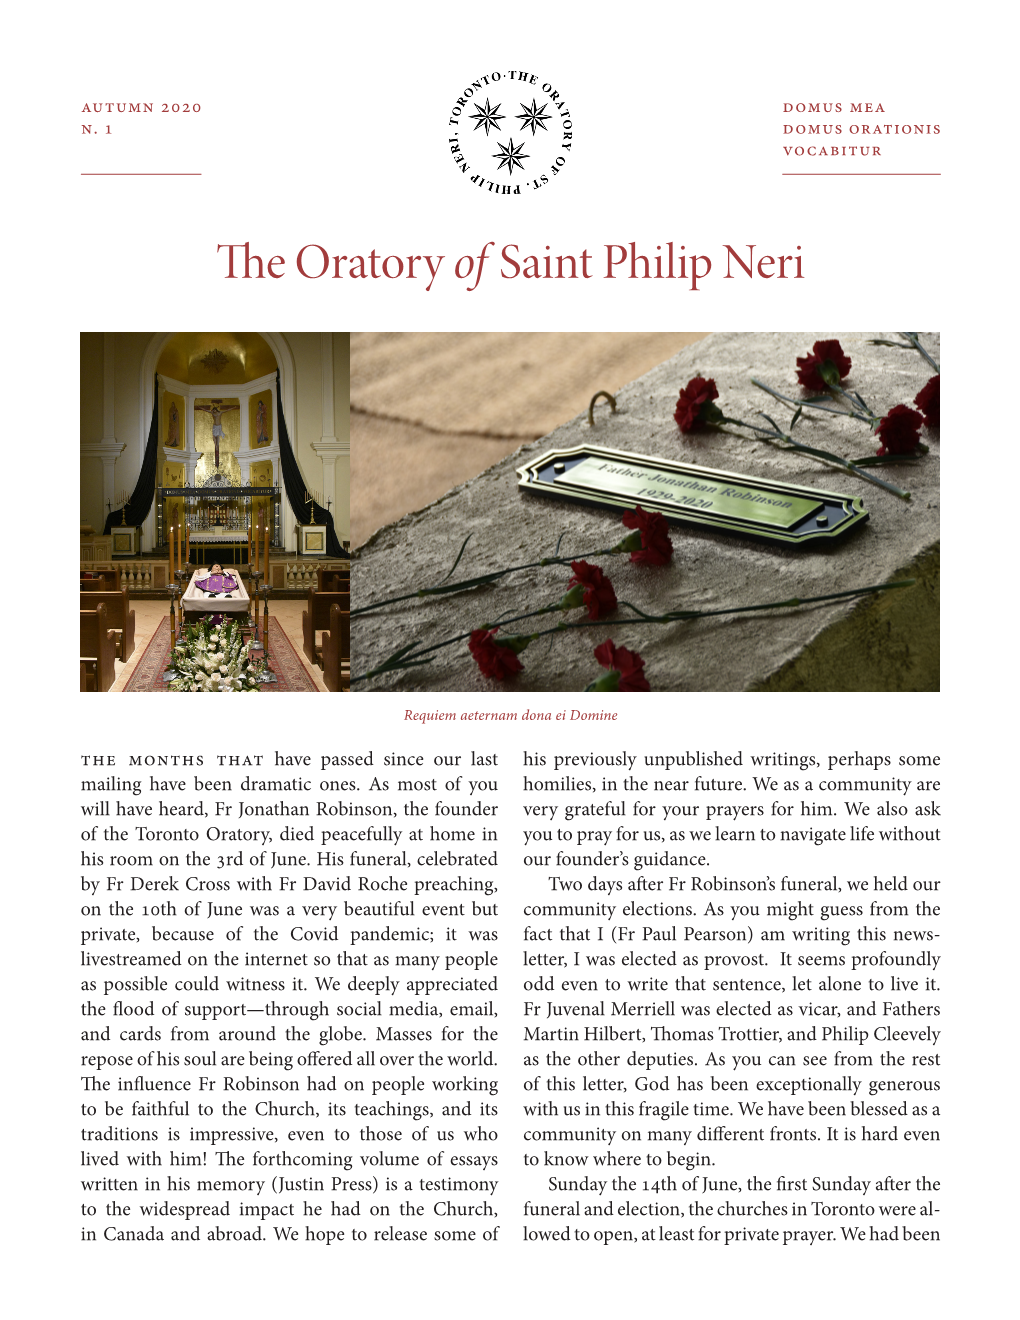 The Oratory of Saint Philip Neri